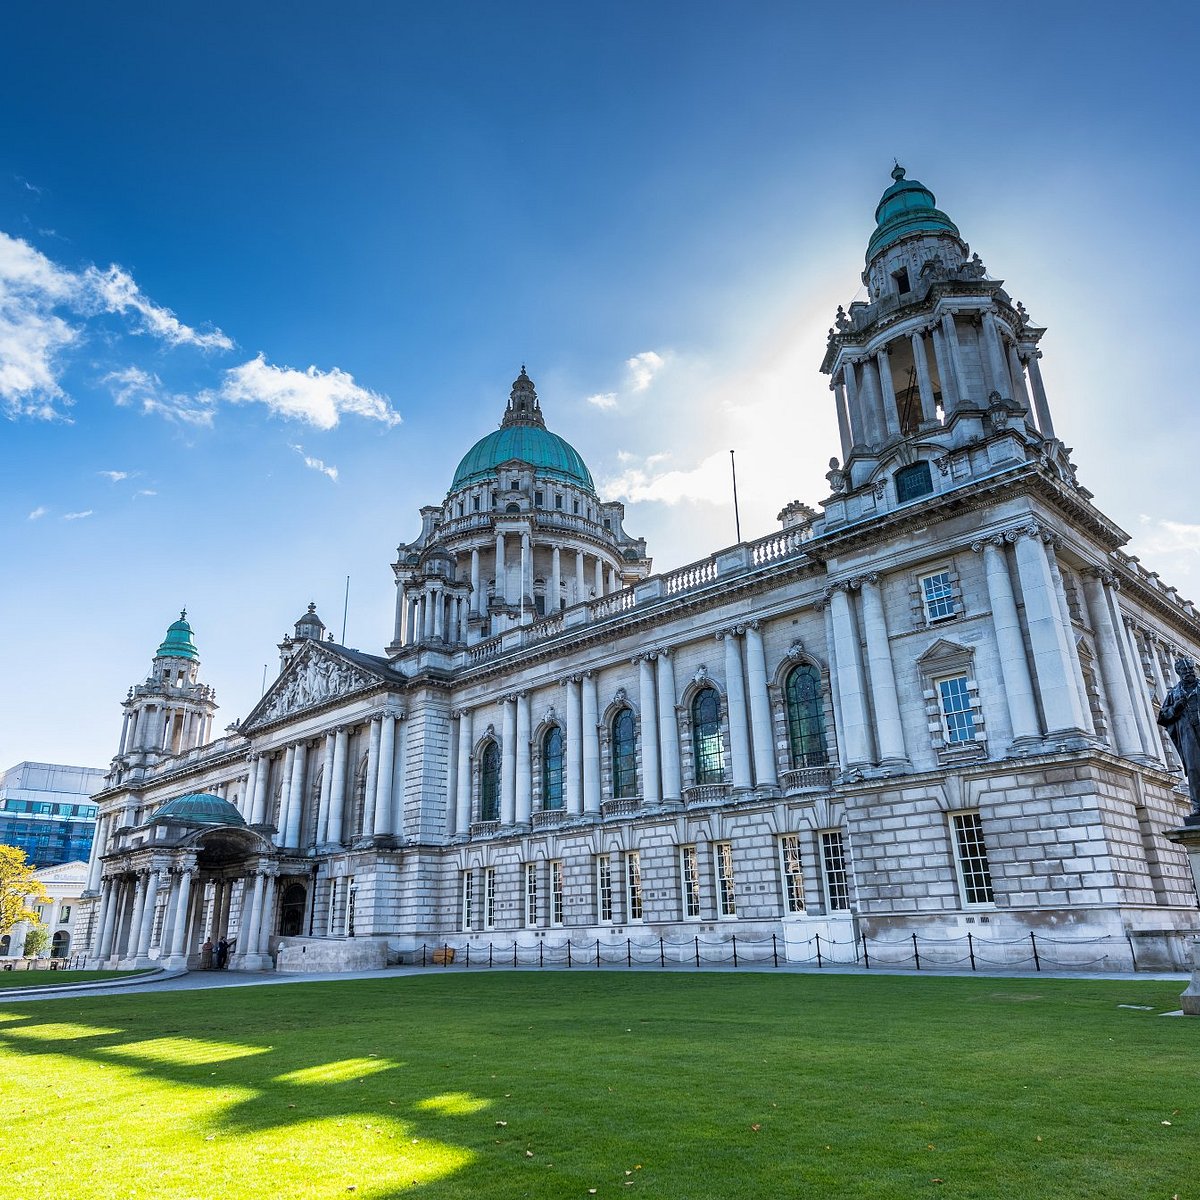 Столица северной ирландии 7. Белфаст Ирландия. Belfast столица. Северная Ирландия город Белфаст. Ратуша в Белфасте.